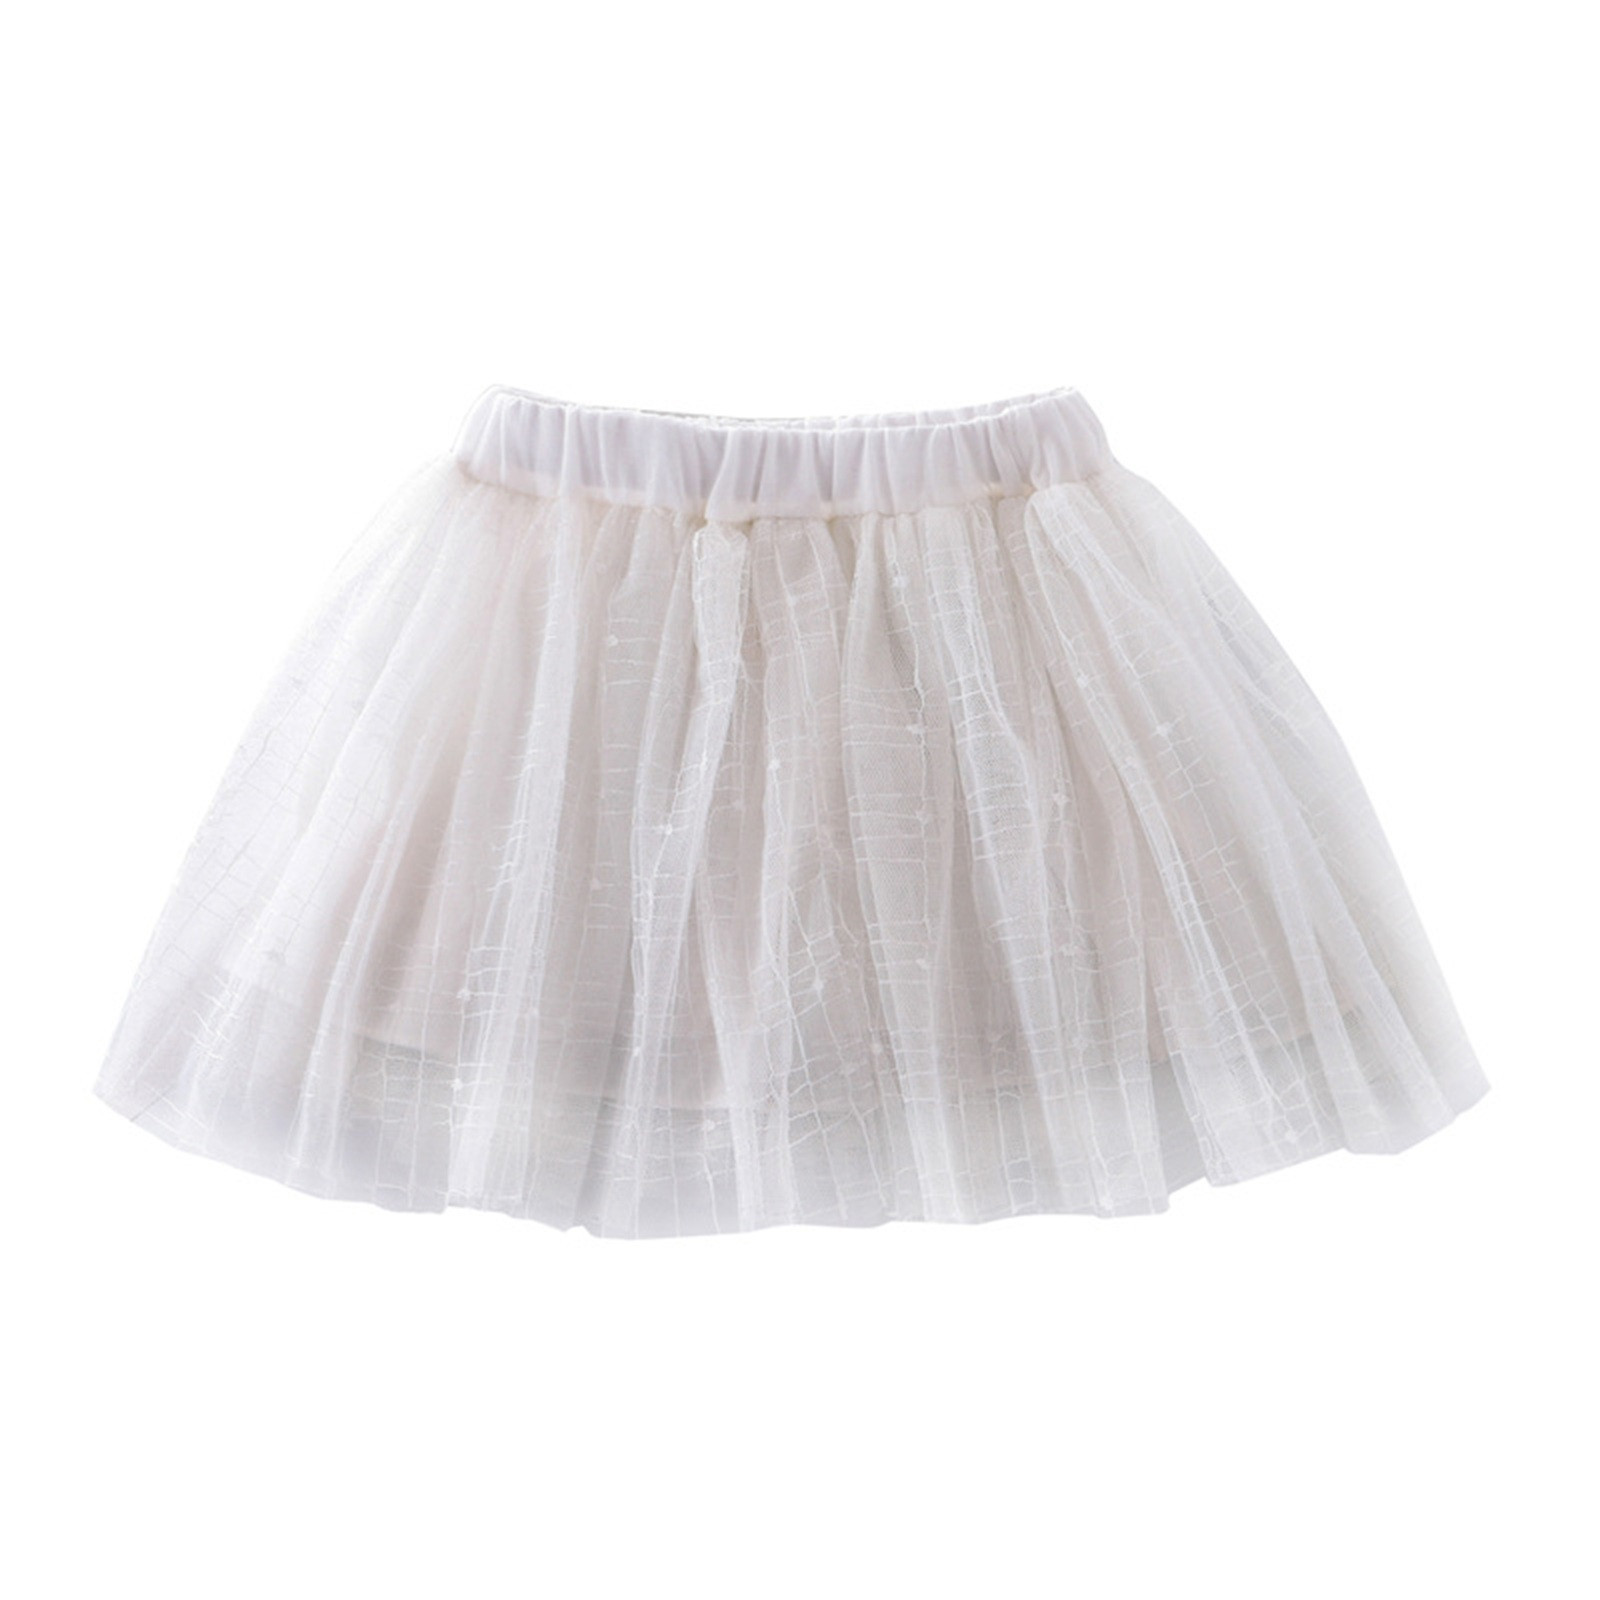 Entyinea Layered Tulle Tutu Skirt for Girls with Hairbow, Girl Ballet ...